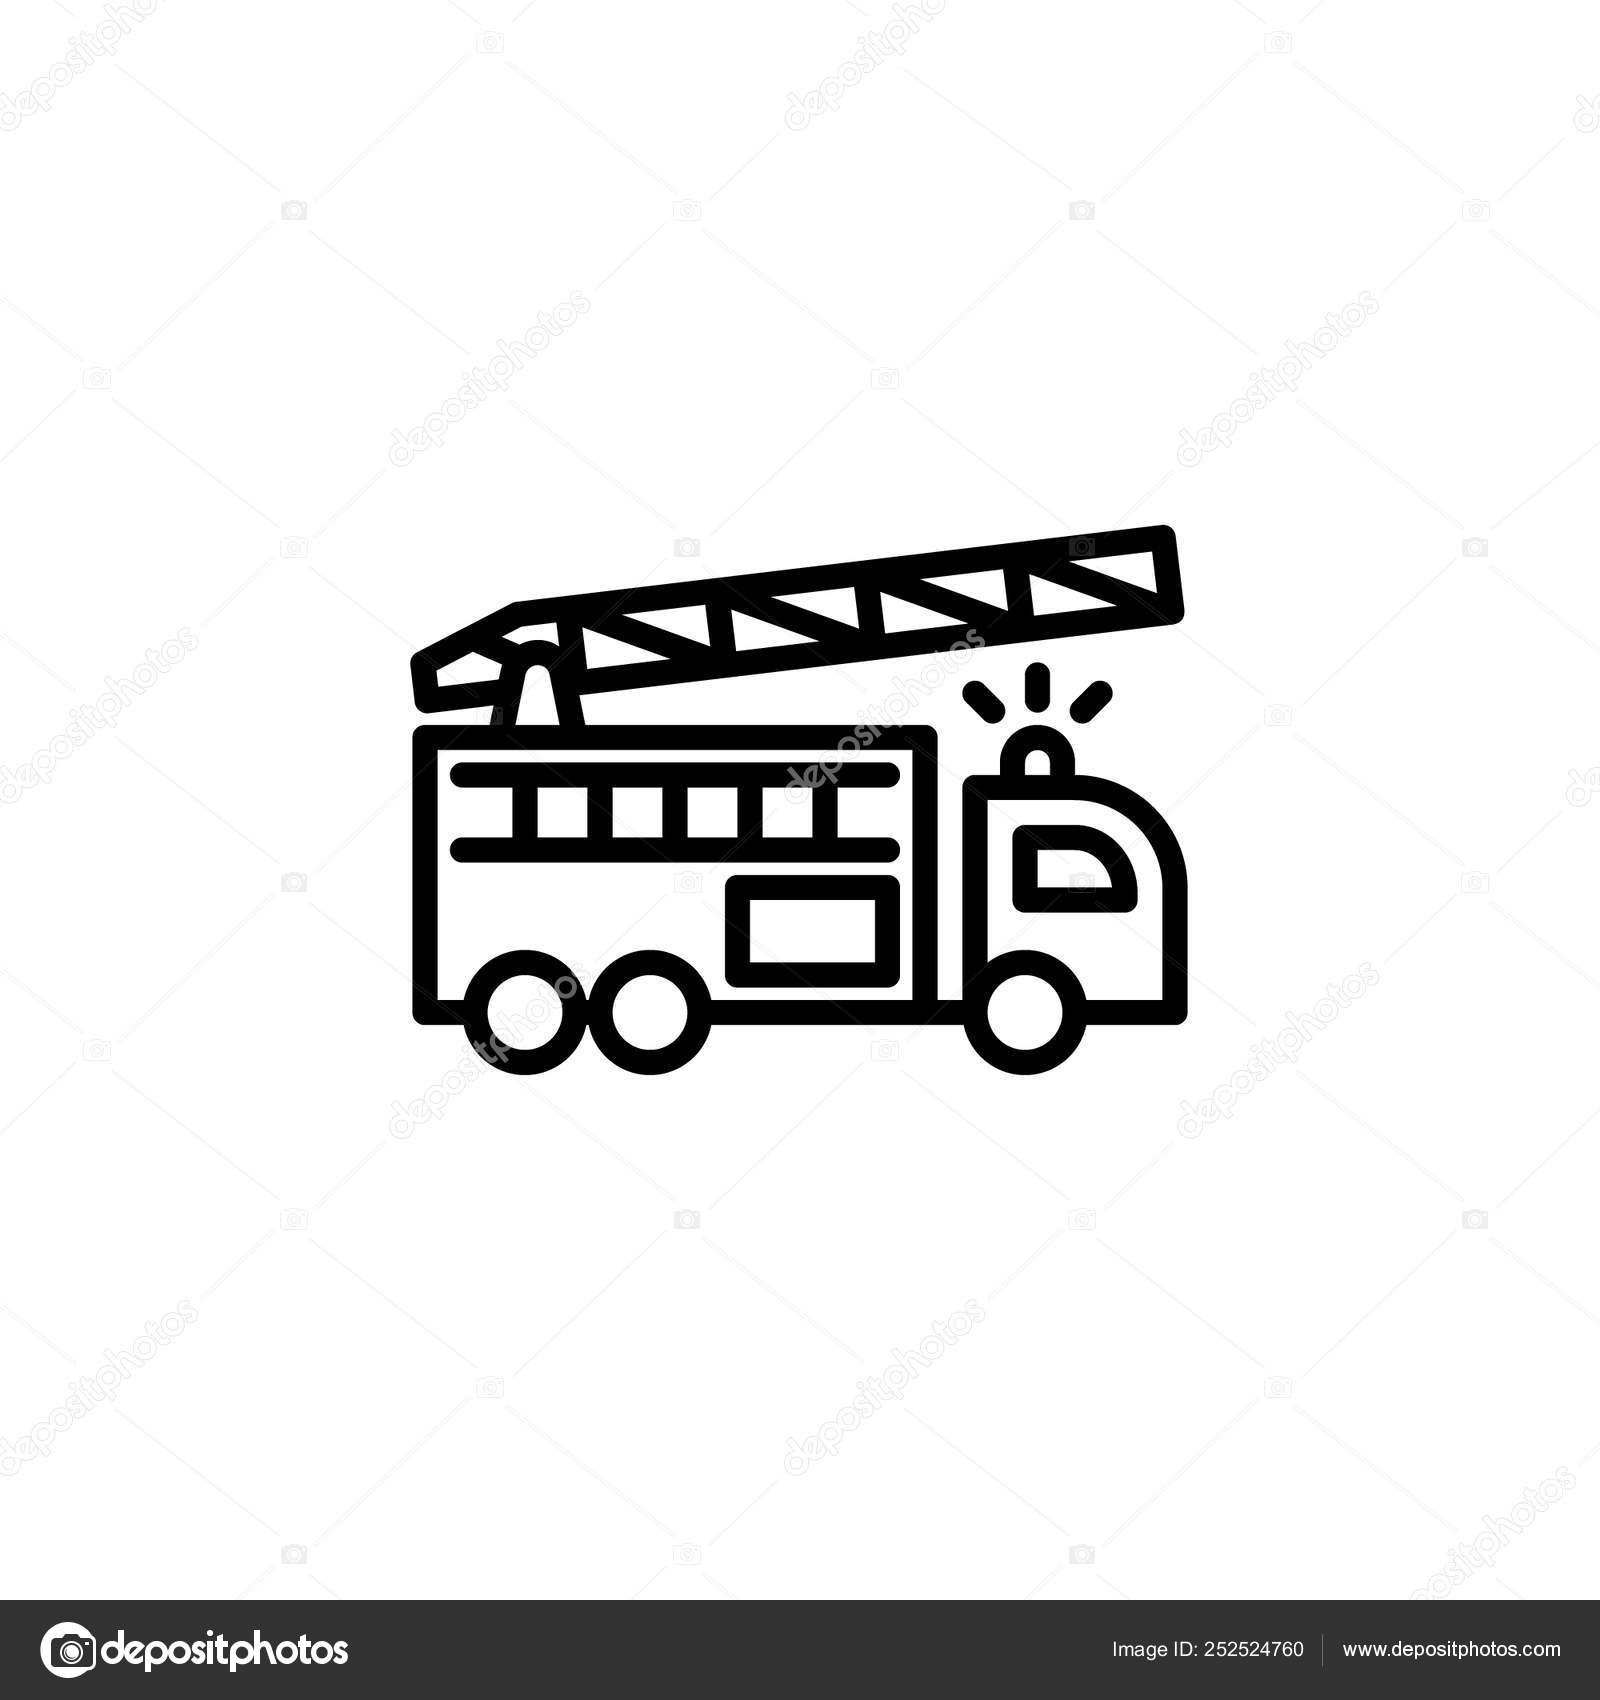 Car engine - Free transport icons